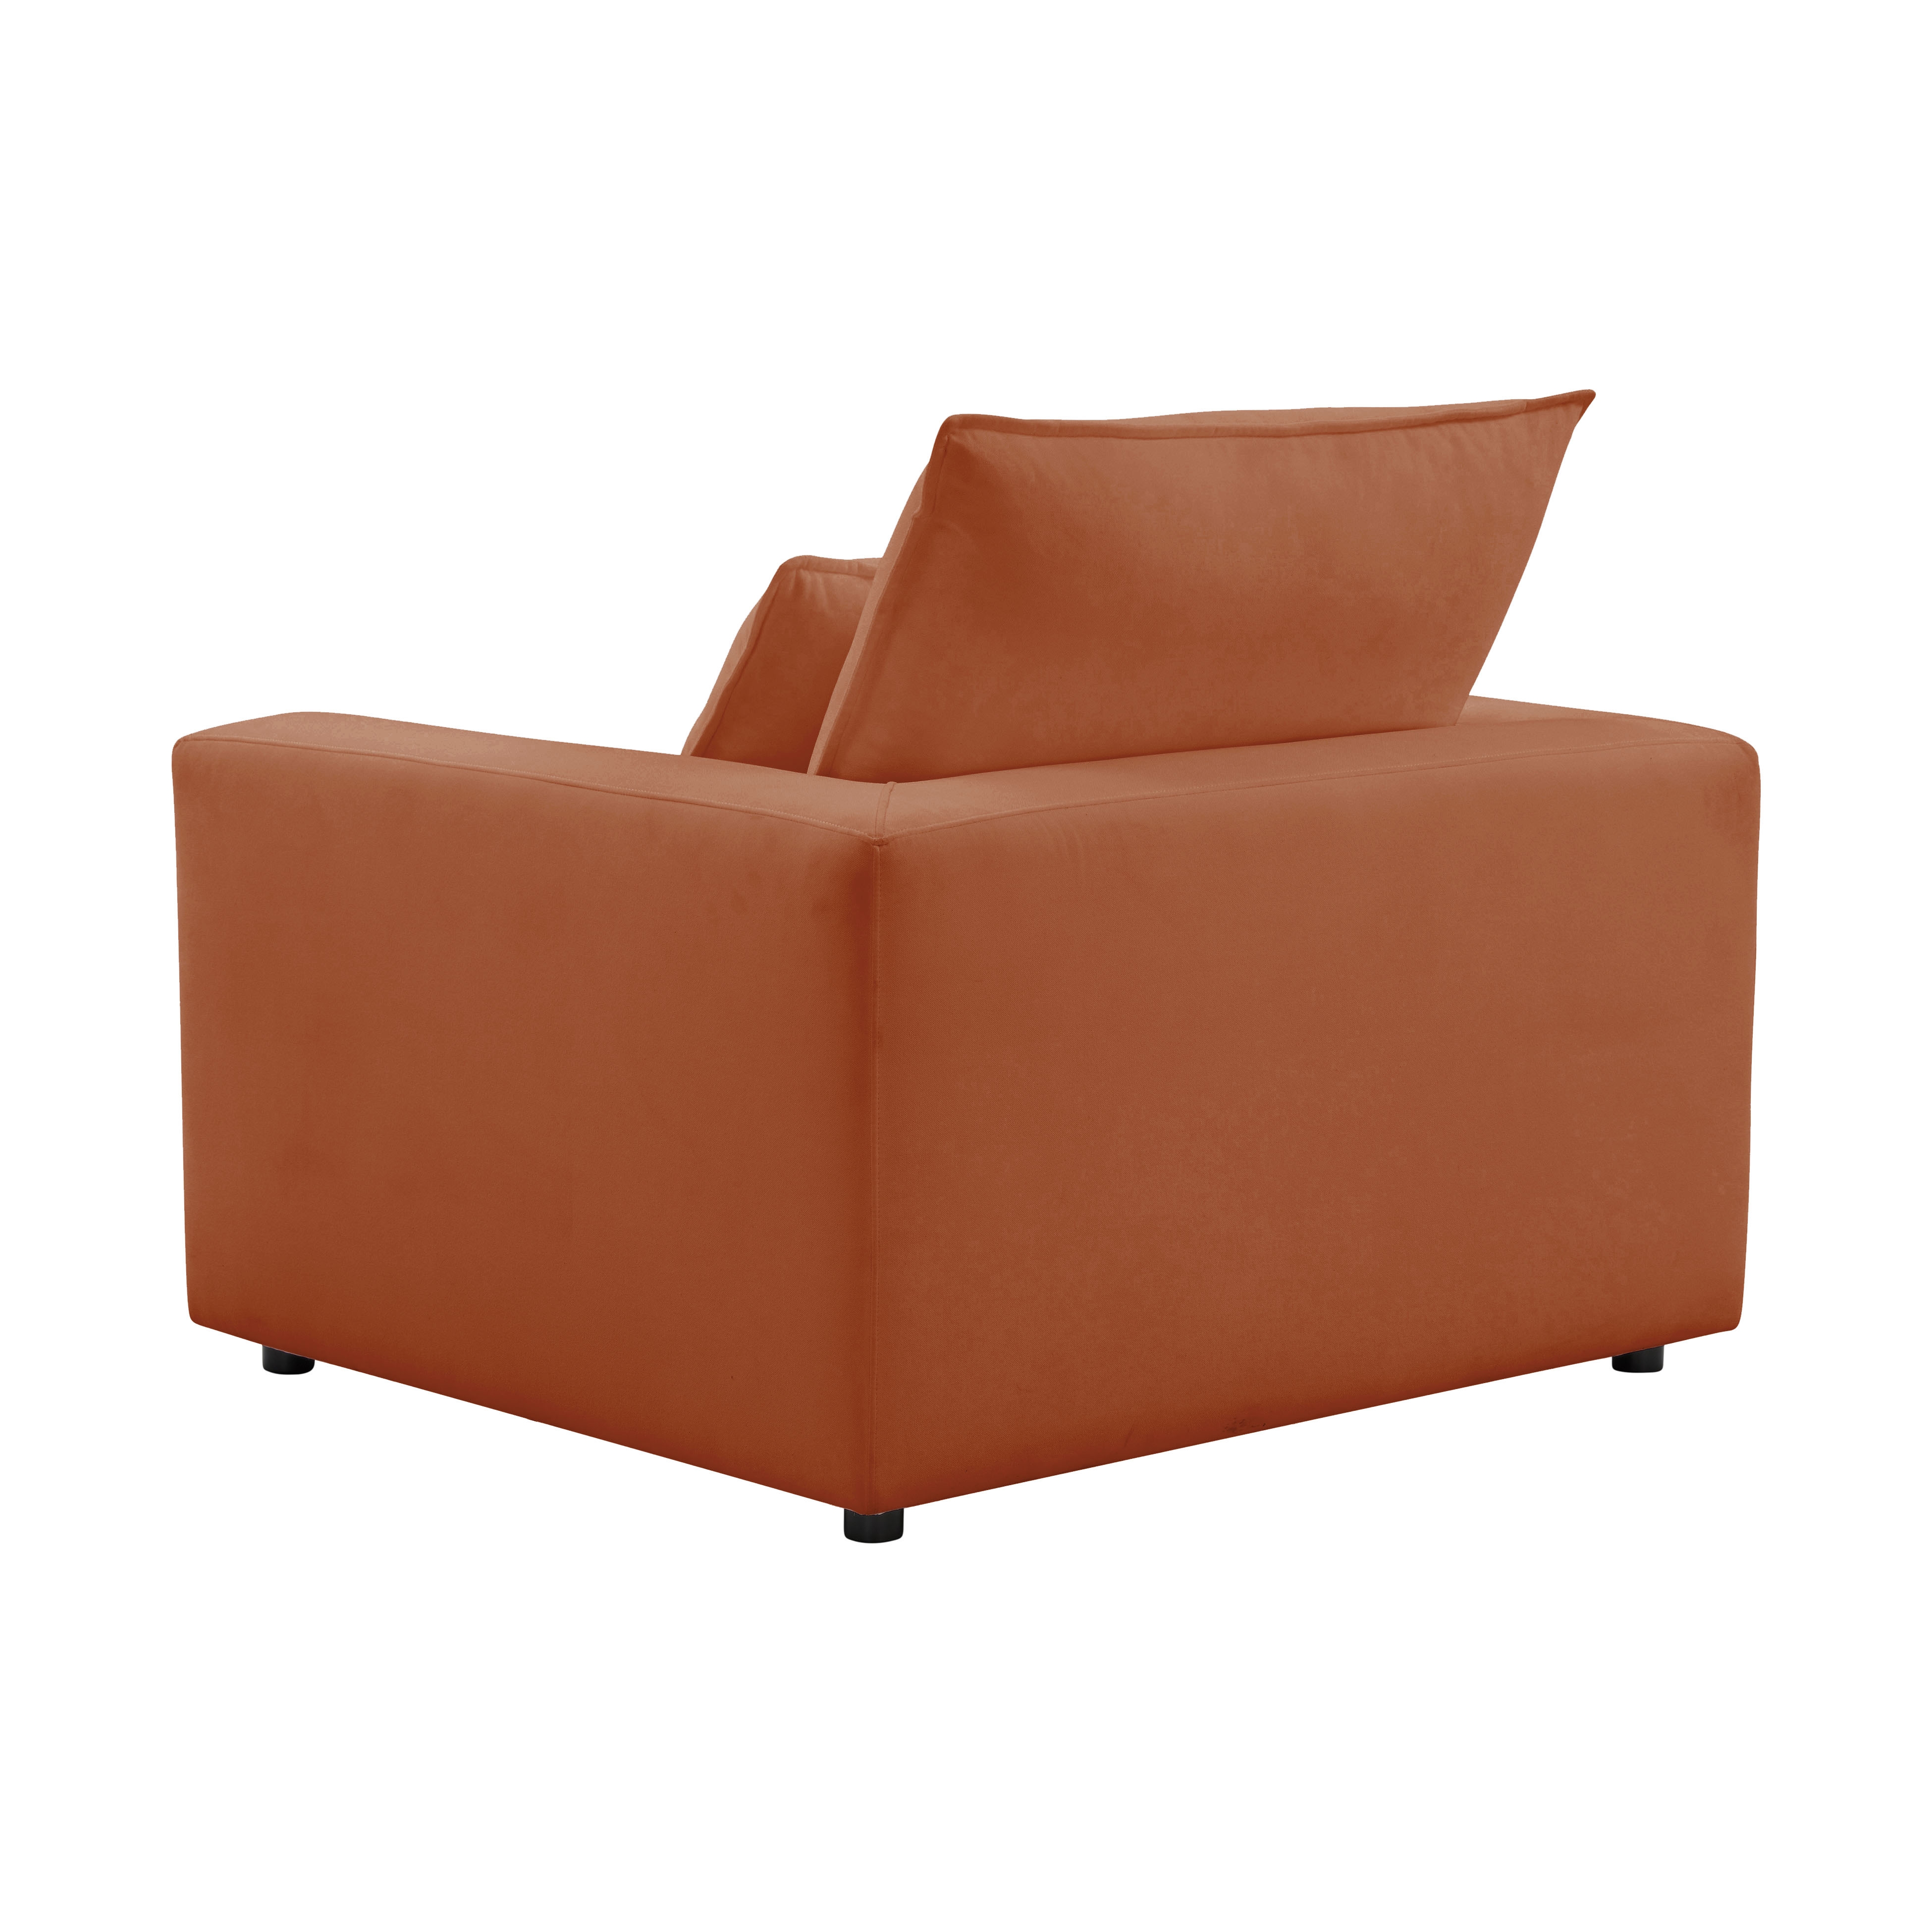 Cali Rust Arm Chair - Image 3